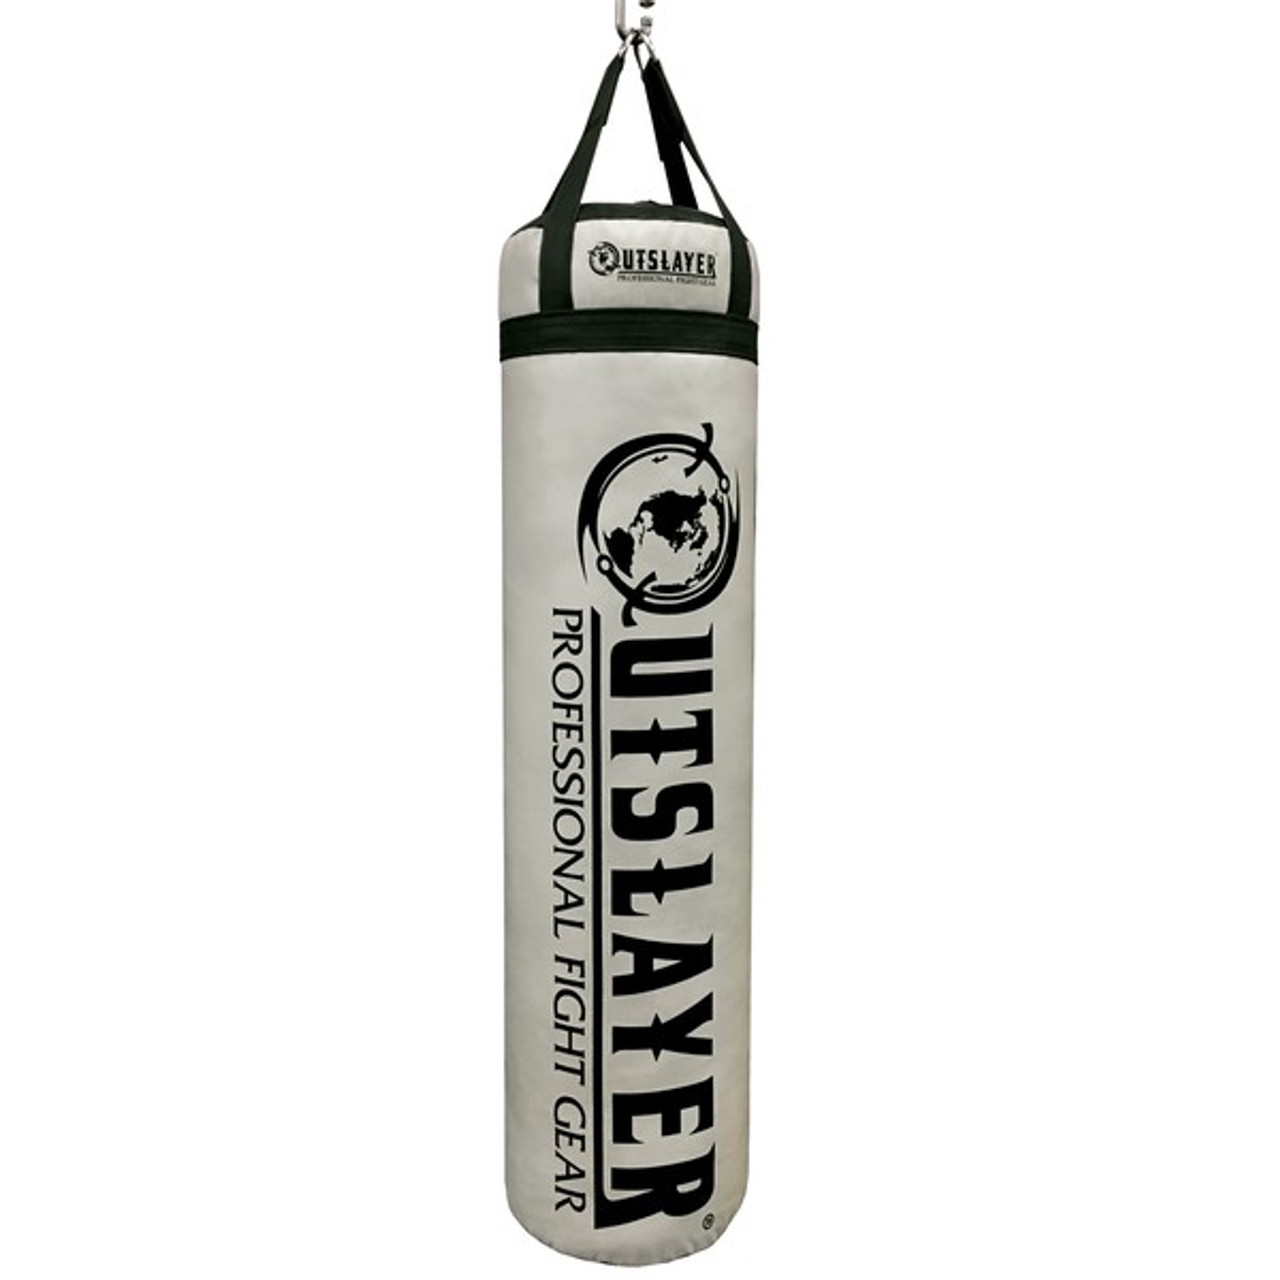 Pro Boxing® 15 lbs Heavy Punching Bag – Pro Boxing Supplies